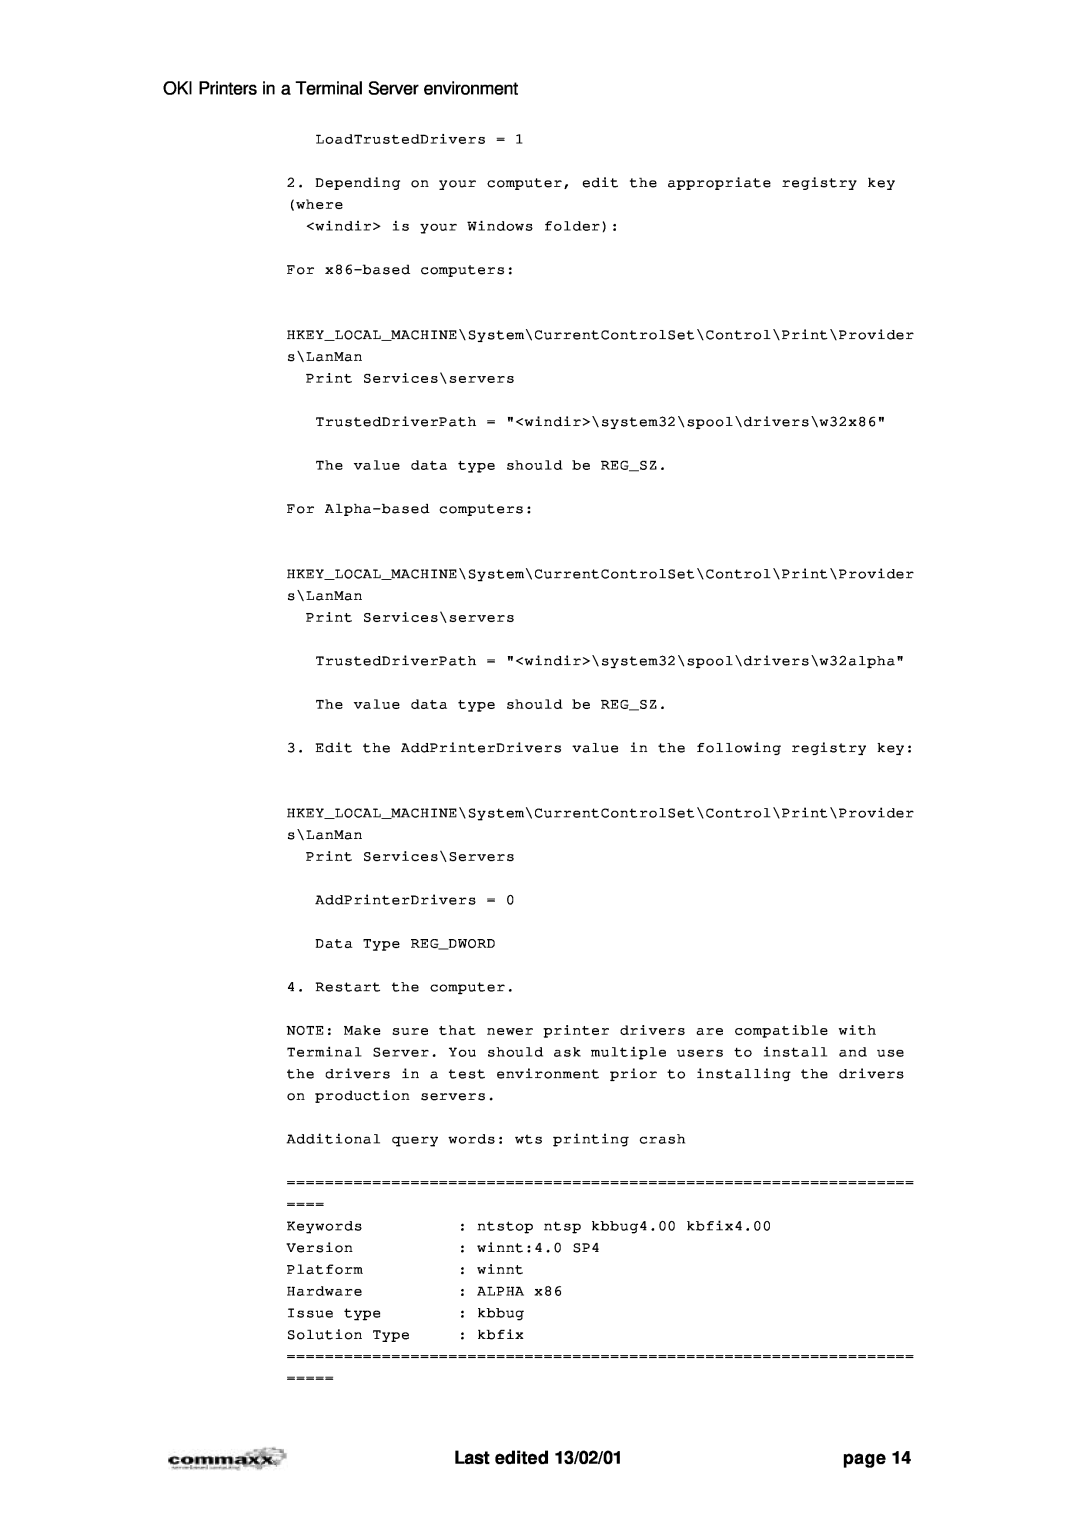 Oki 7200, 7400 manual OKI Printers in a Terminal Server environment, Last edited 13/02/01, page 